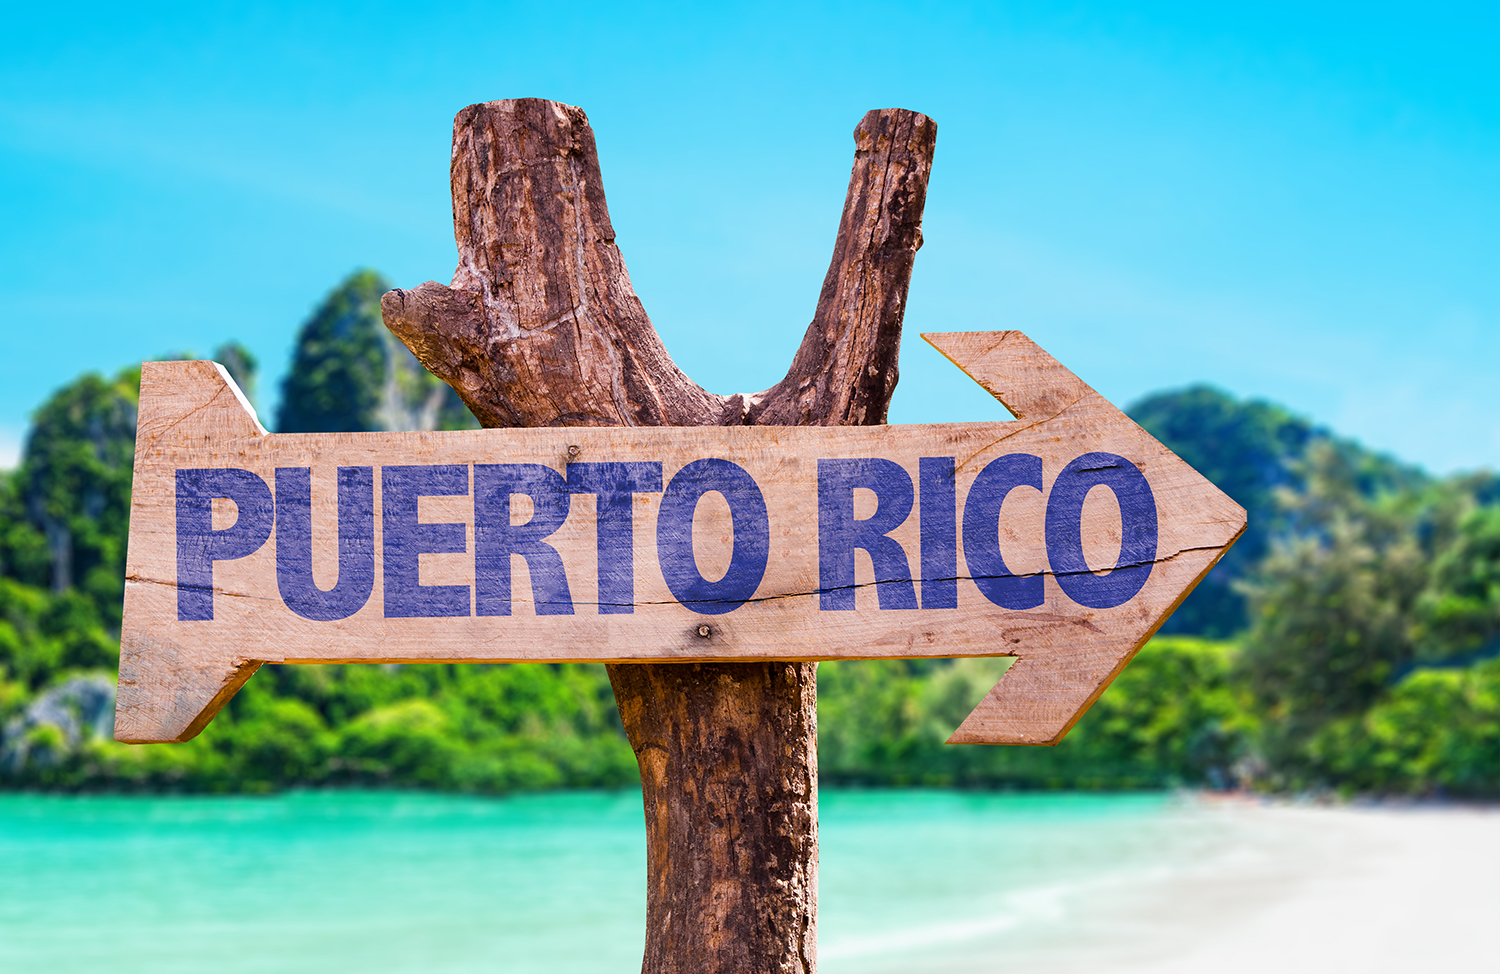 travel to puerto rico do i need a passport